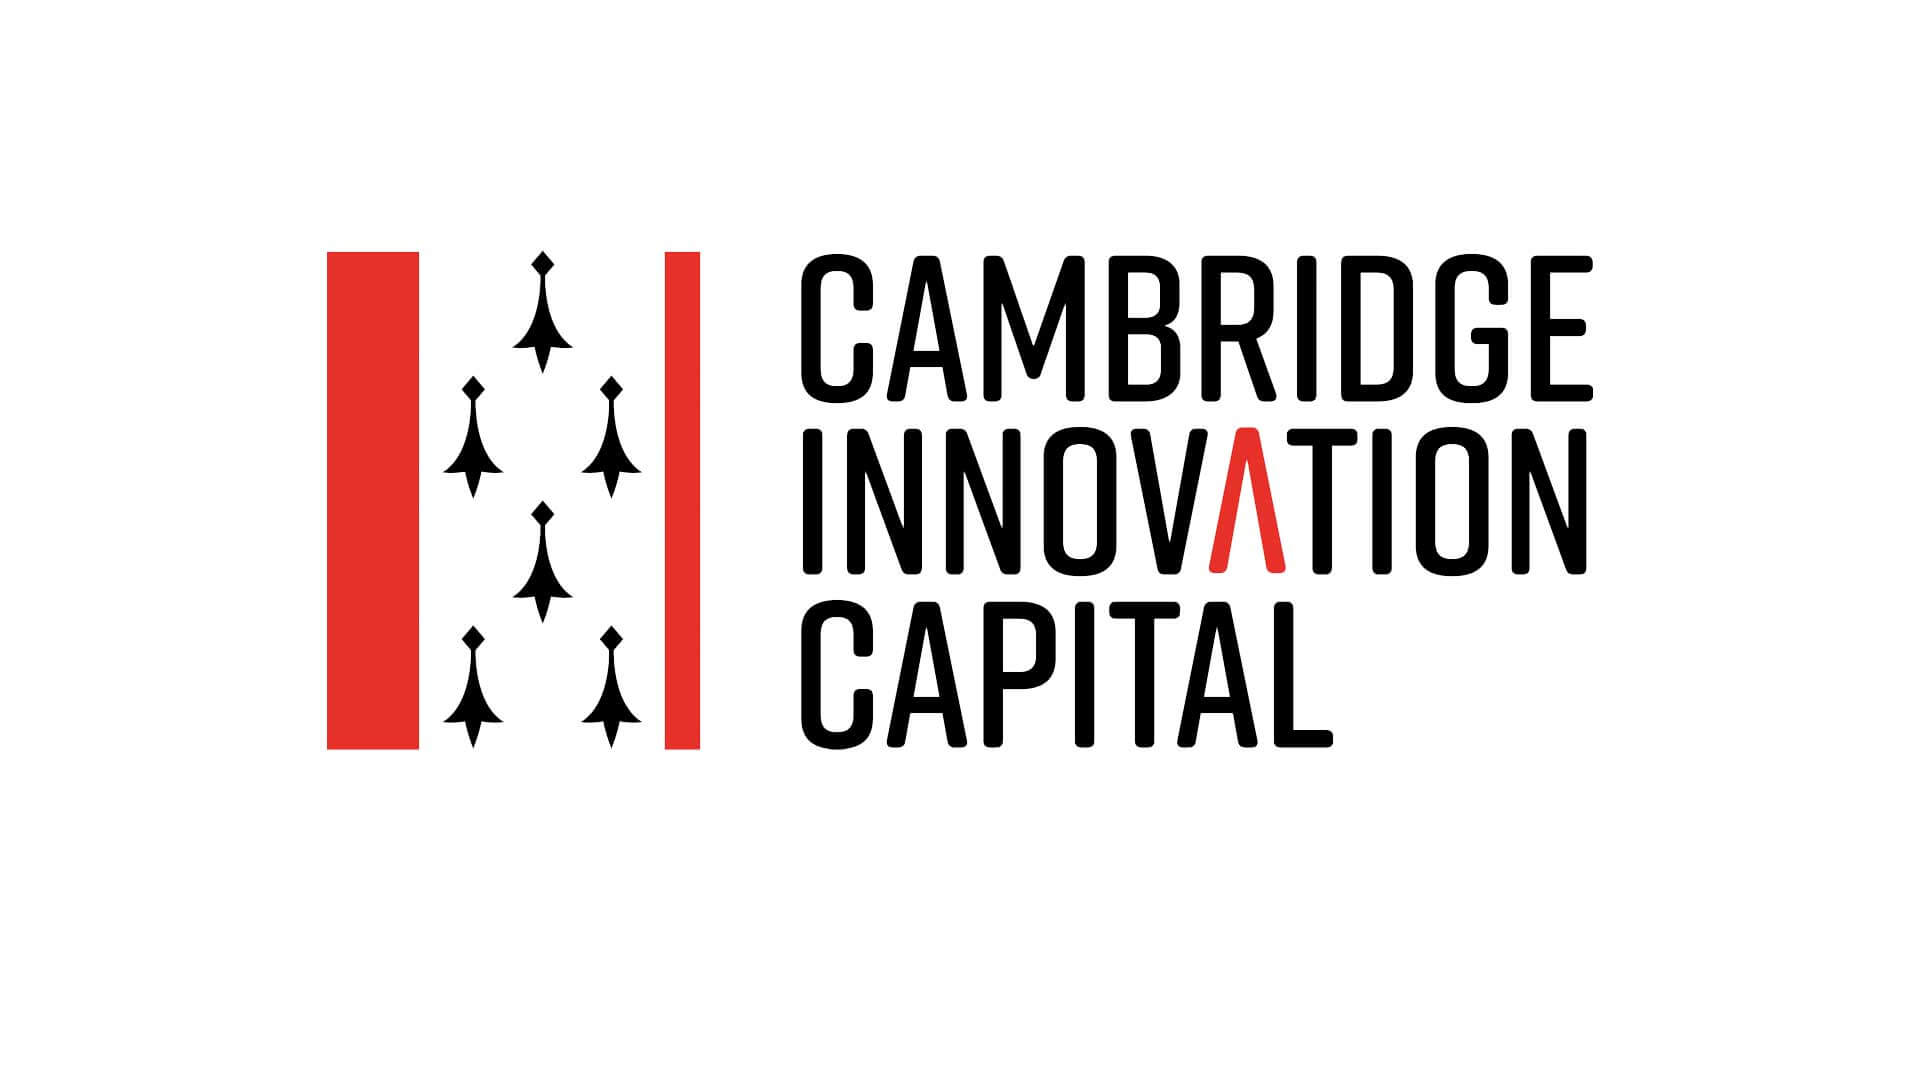 Cambridge Innovation Capital logo